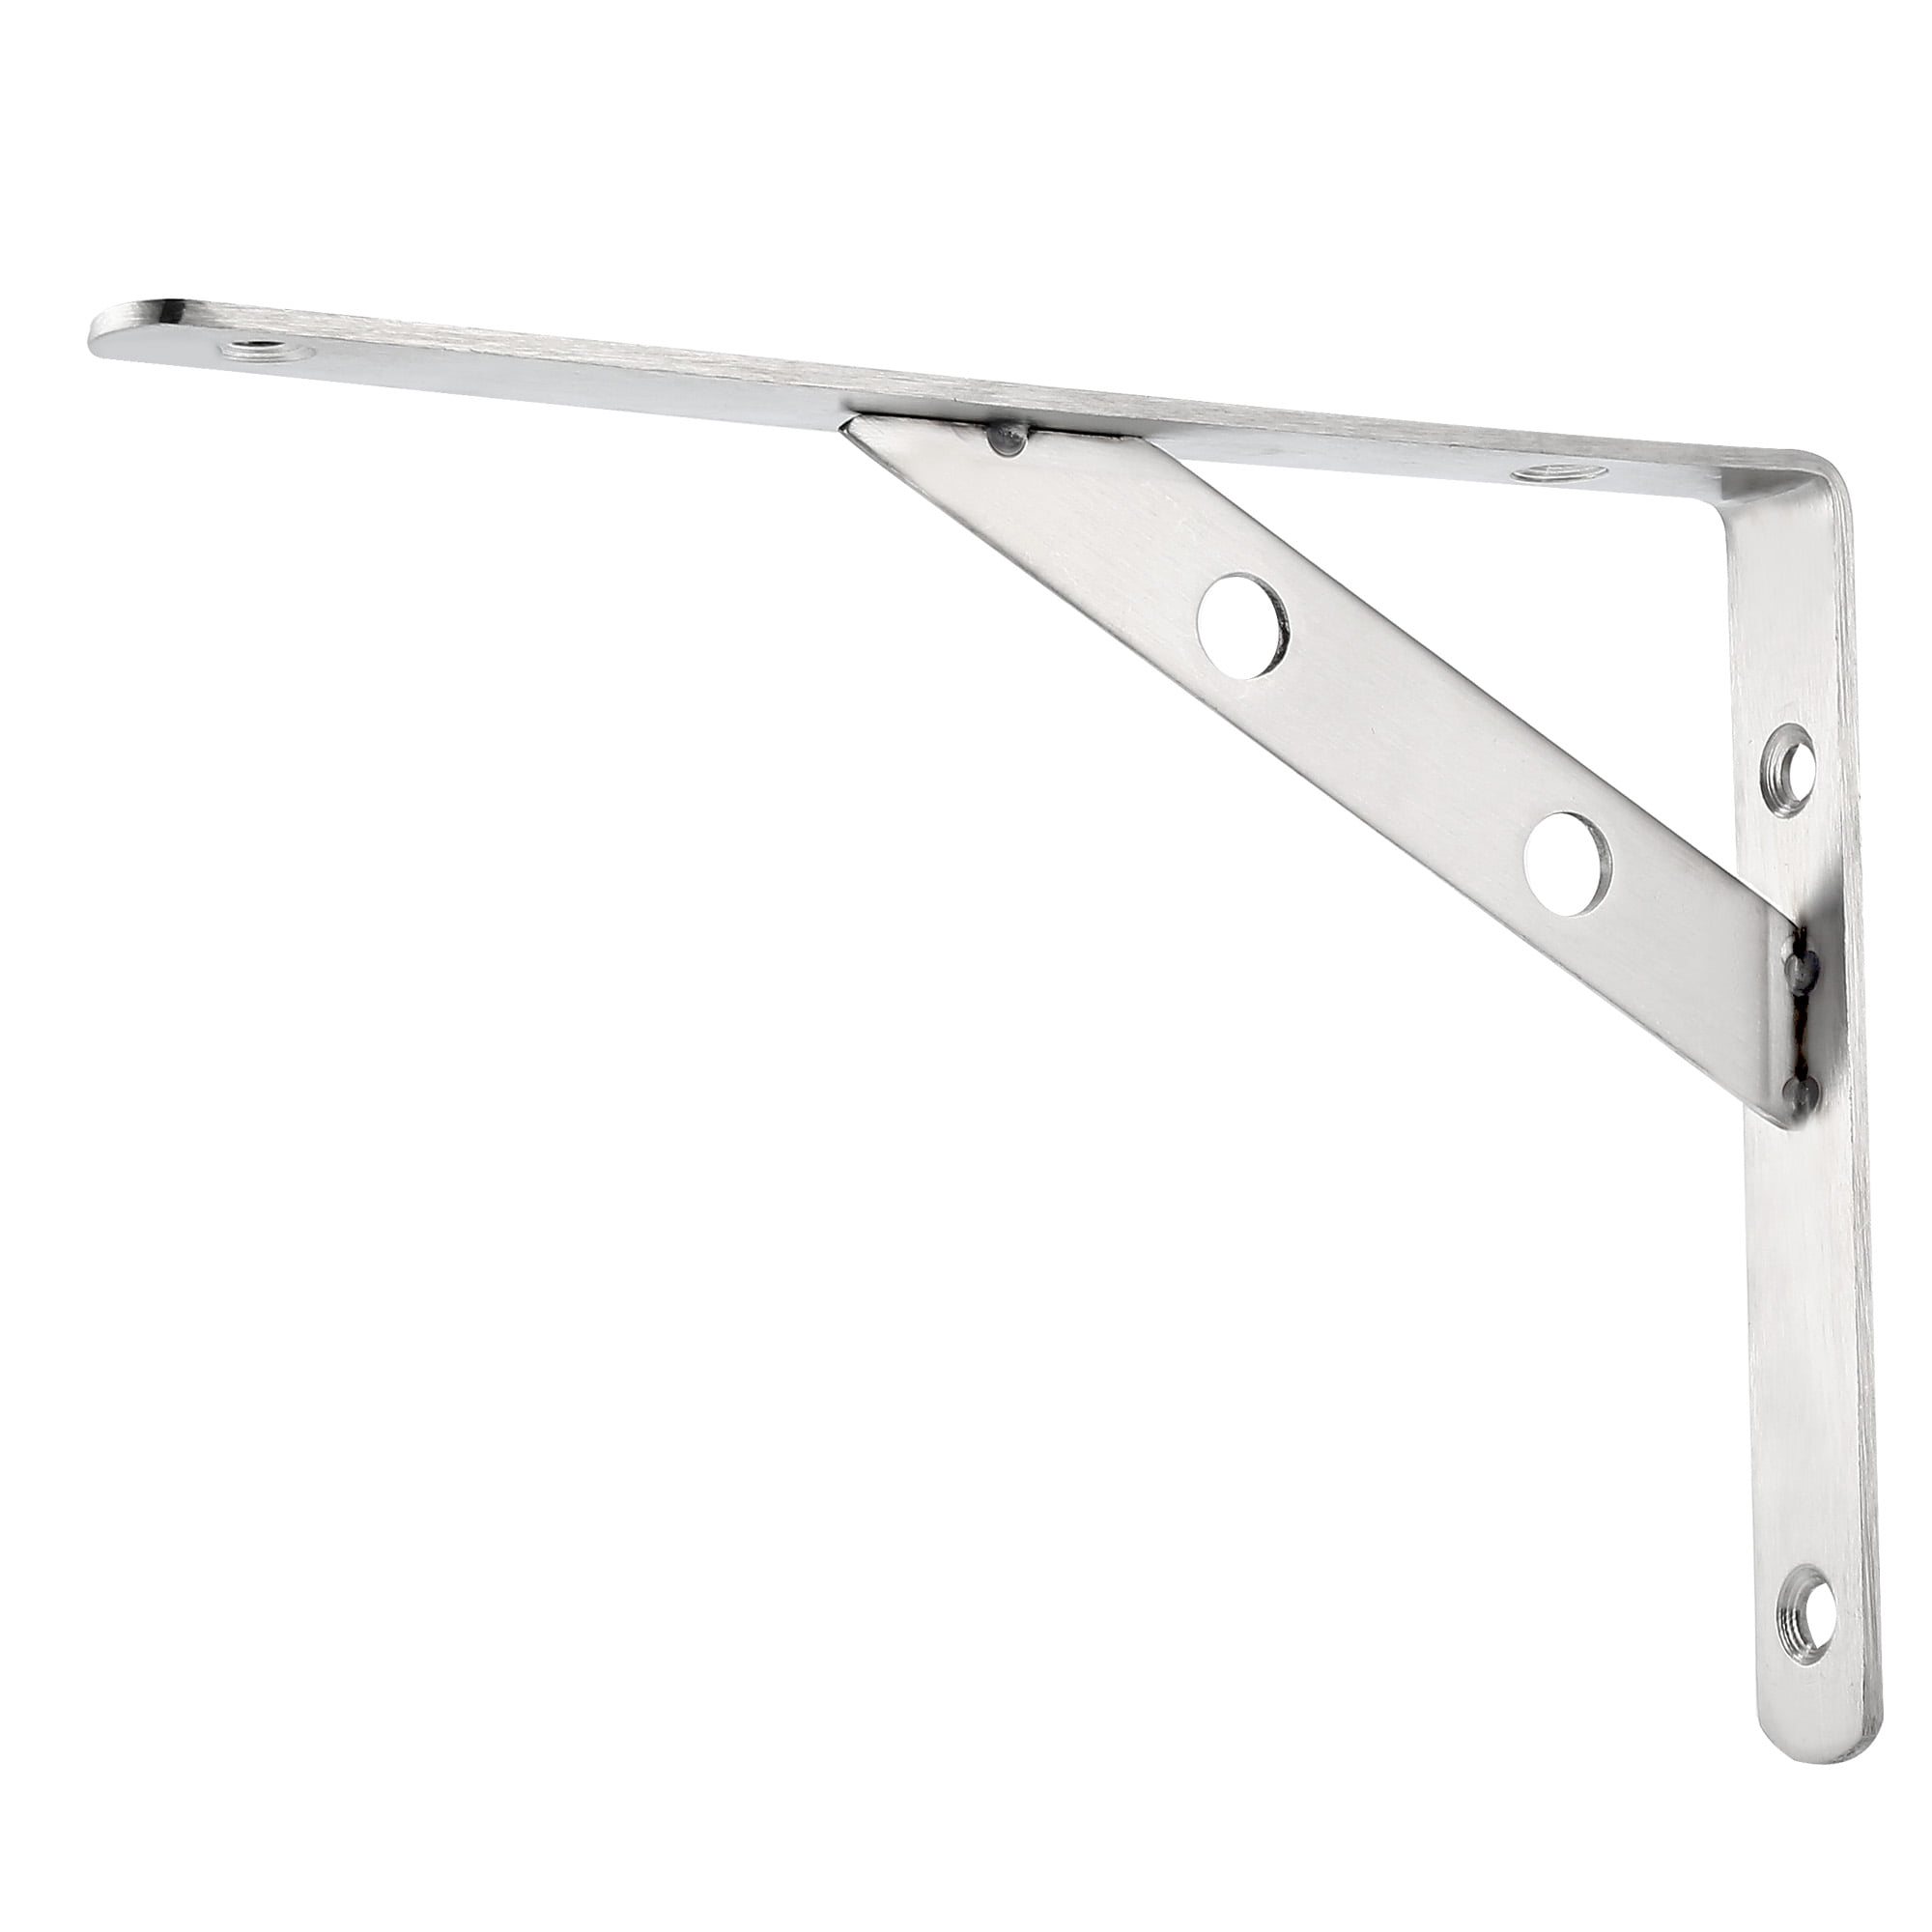 1/4" x 2" x 3" Steel Angle Iron 12in Long Bracing Brackets Welding Shelf 